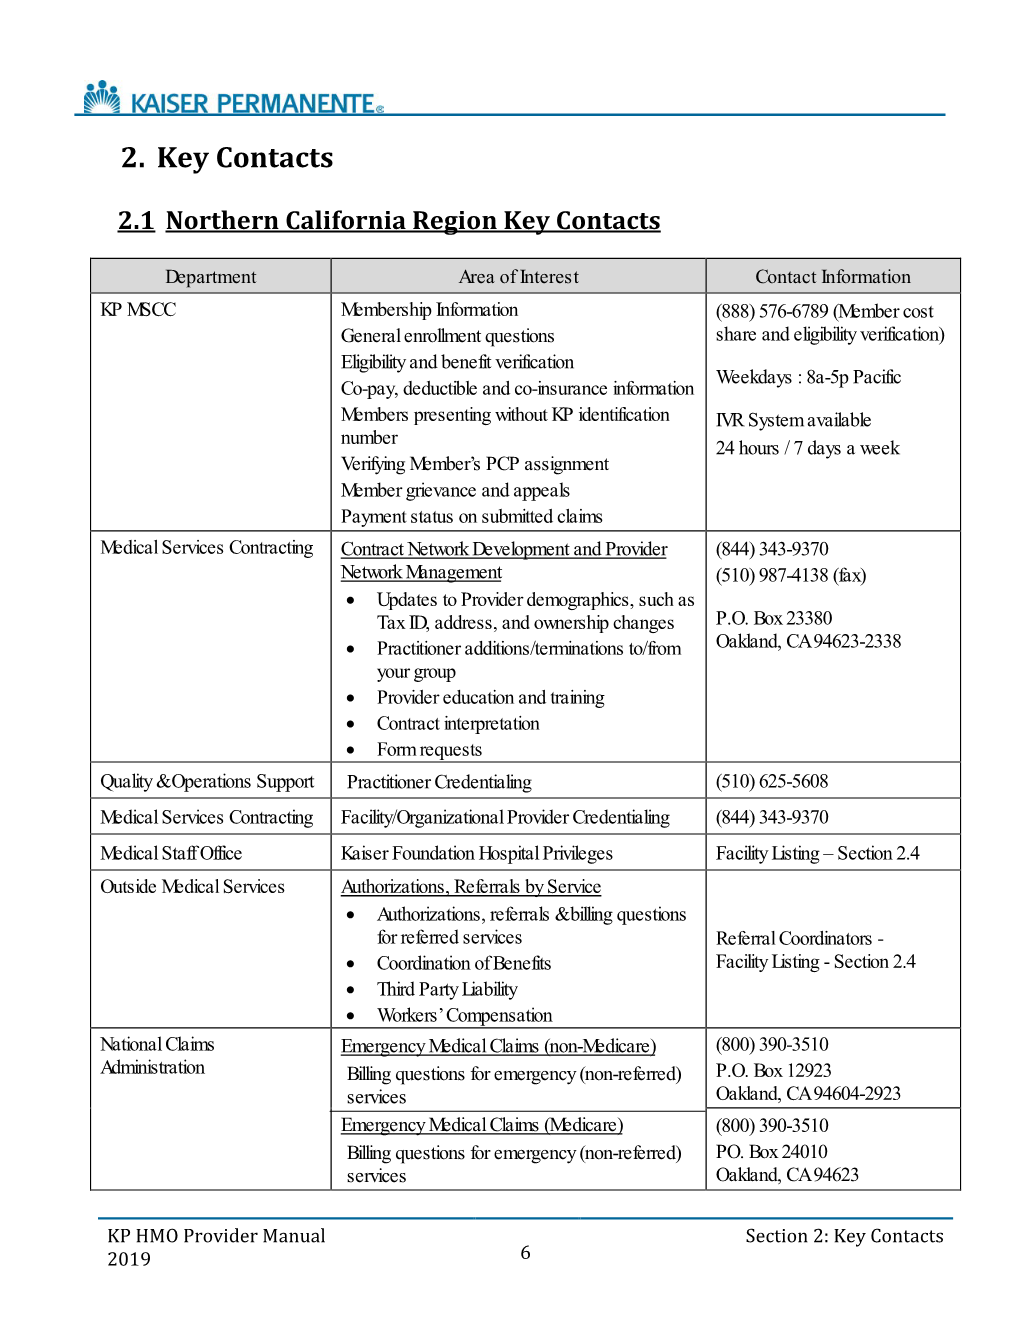 2019 Northern California Kaiser Foundation Health Plan Provider